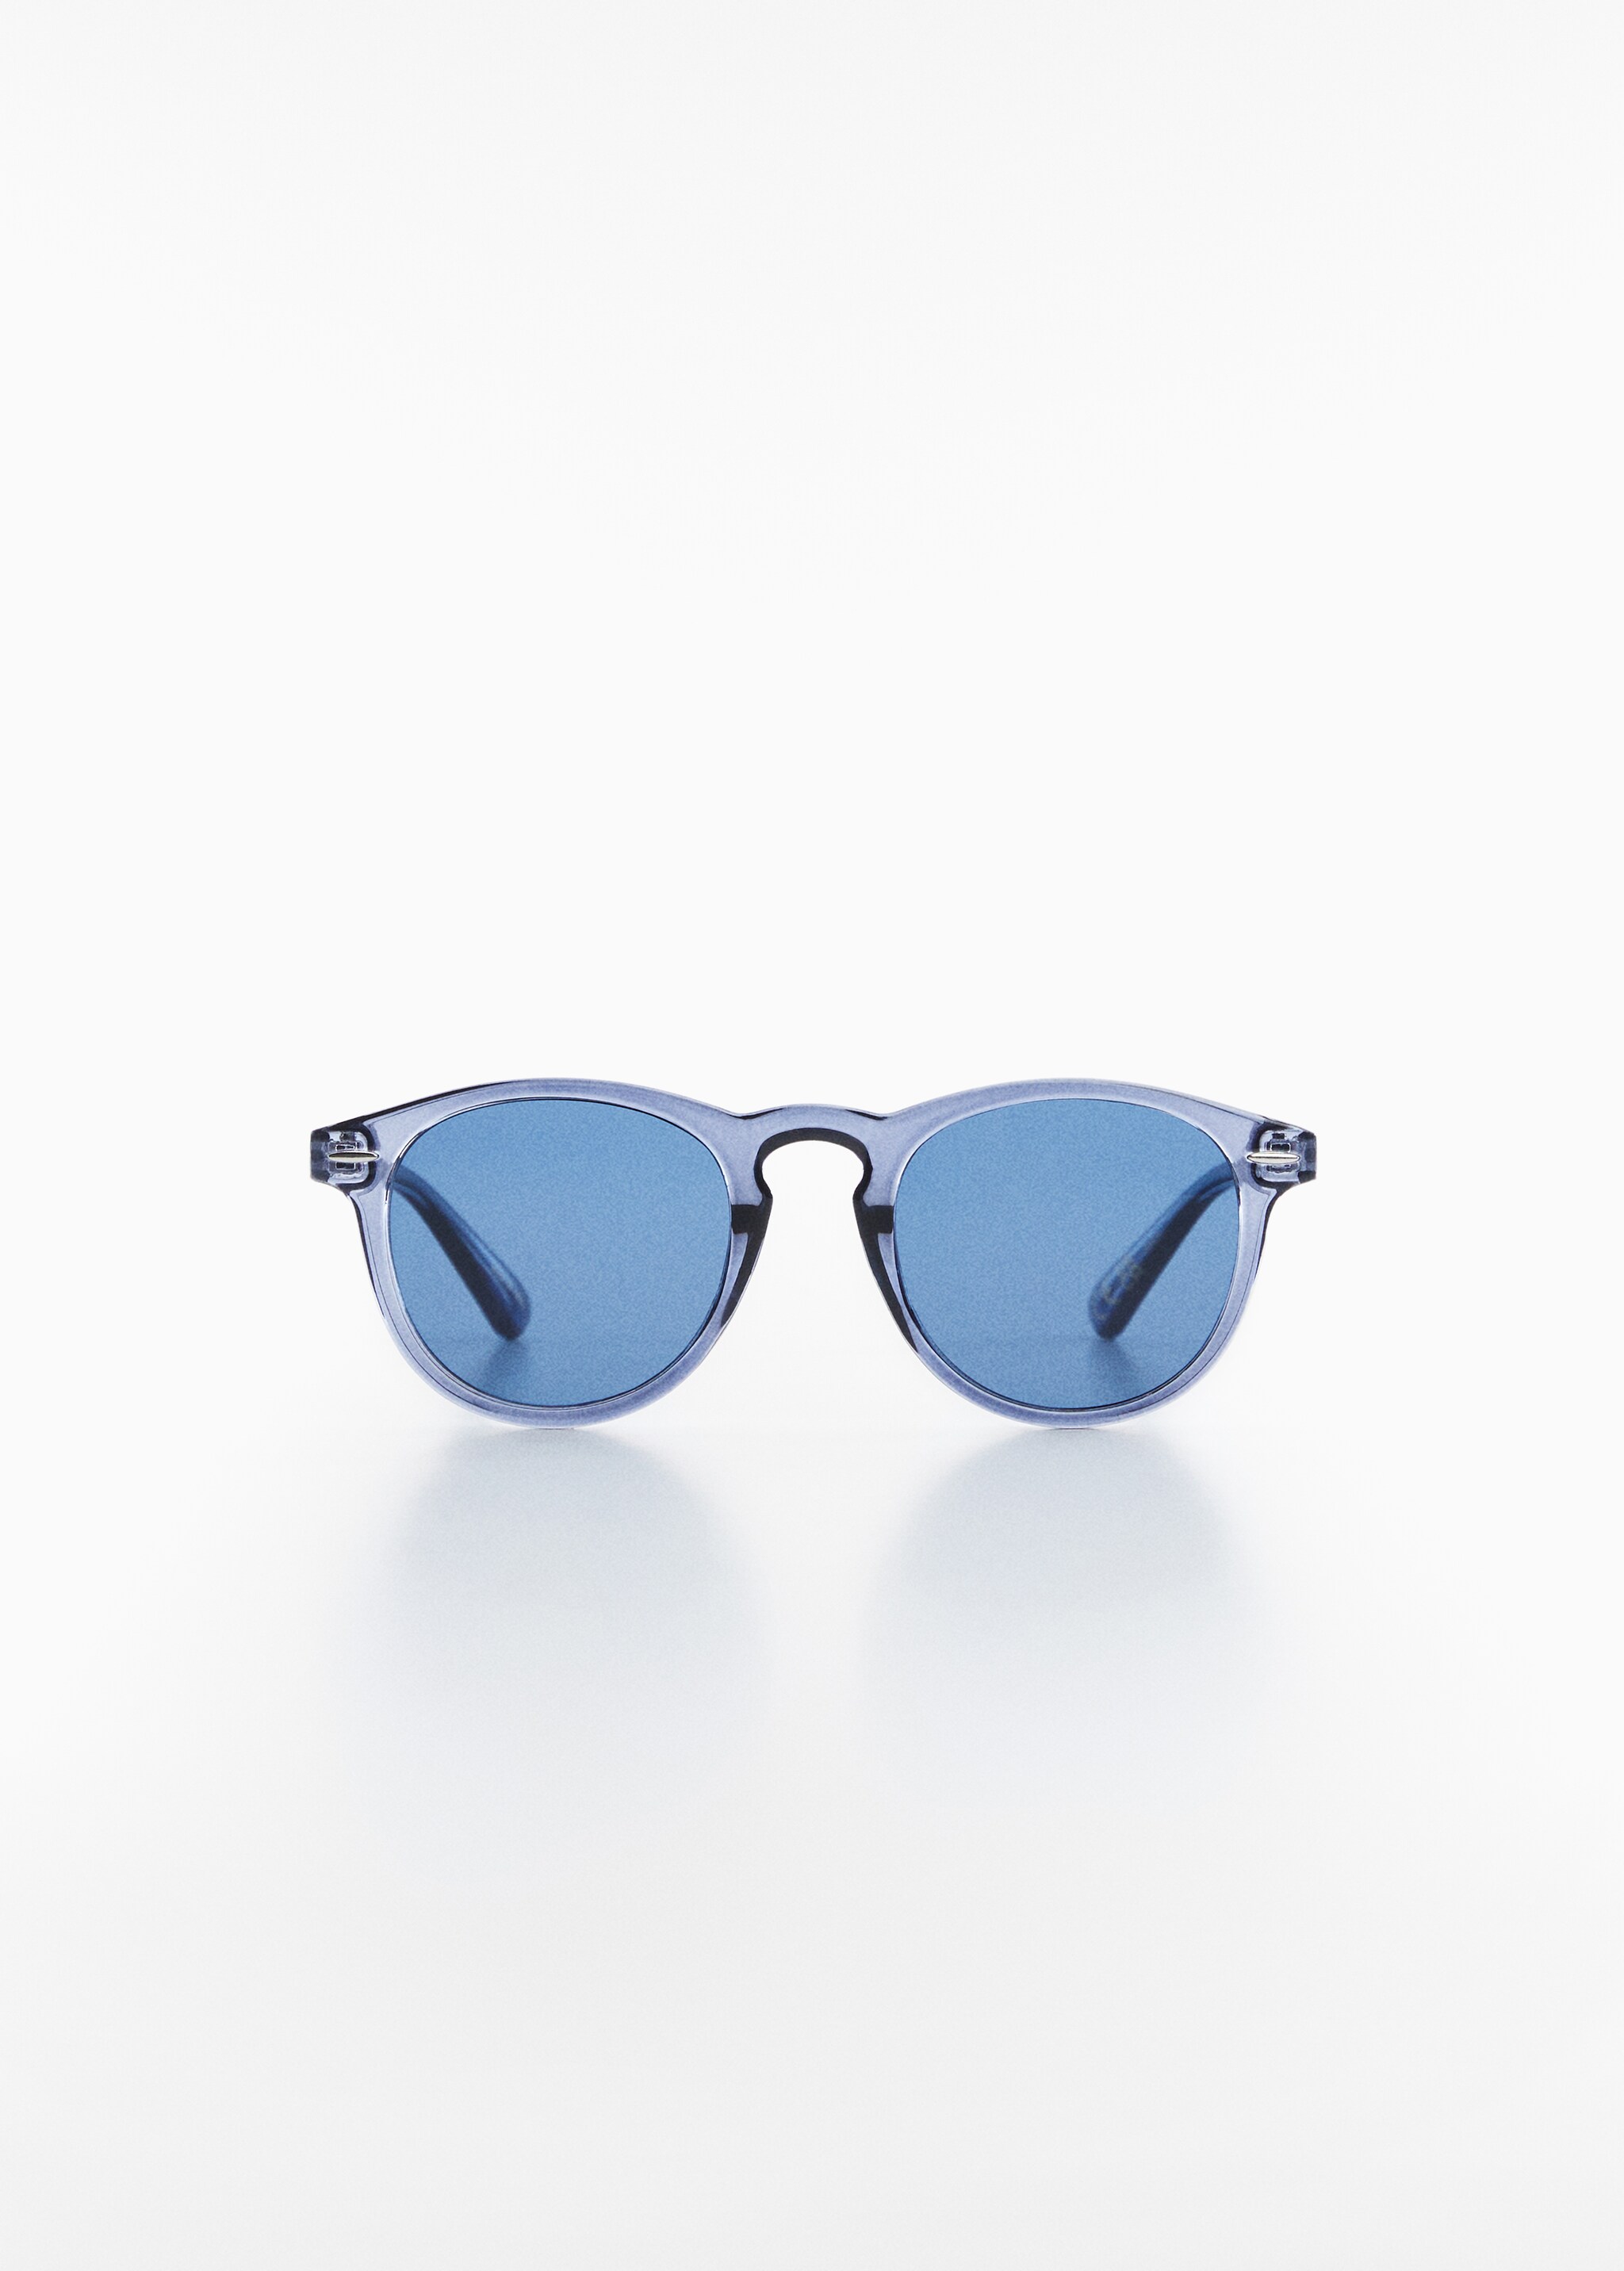 Acetate frame sunglasses - Artikel zonder model